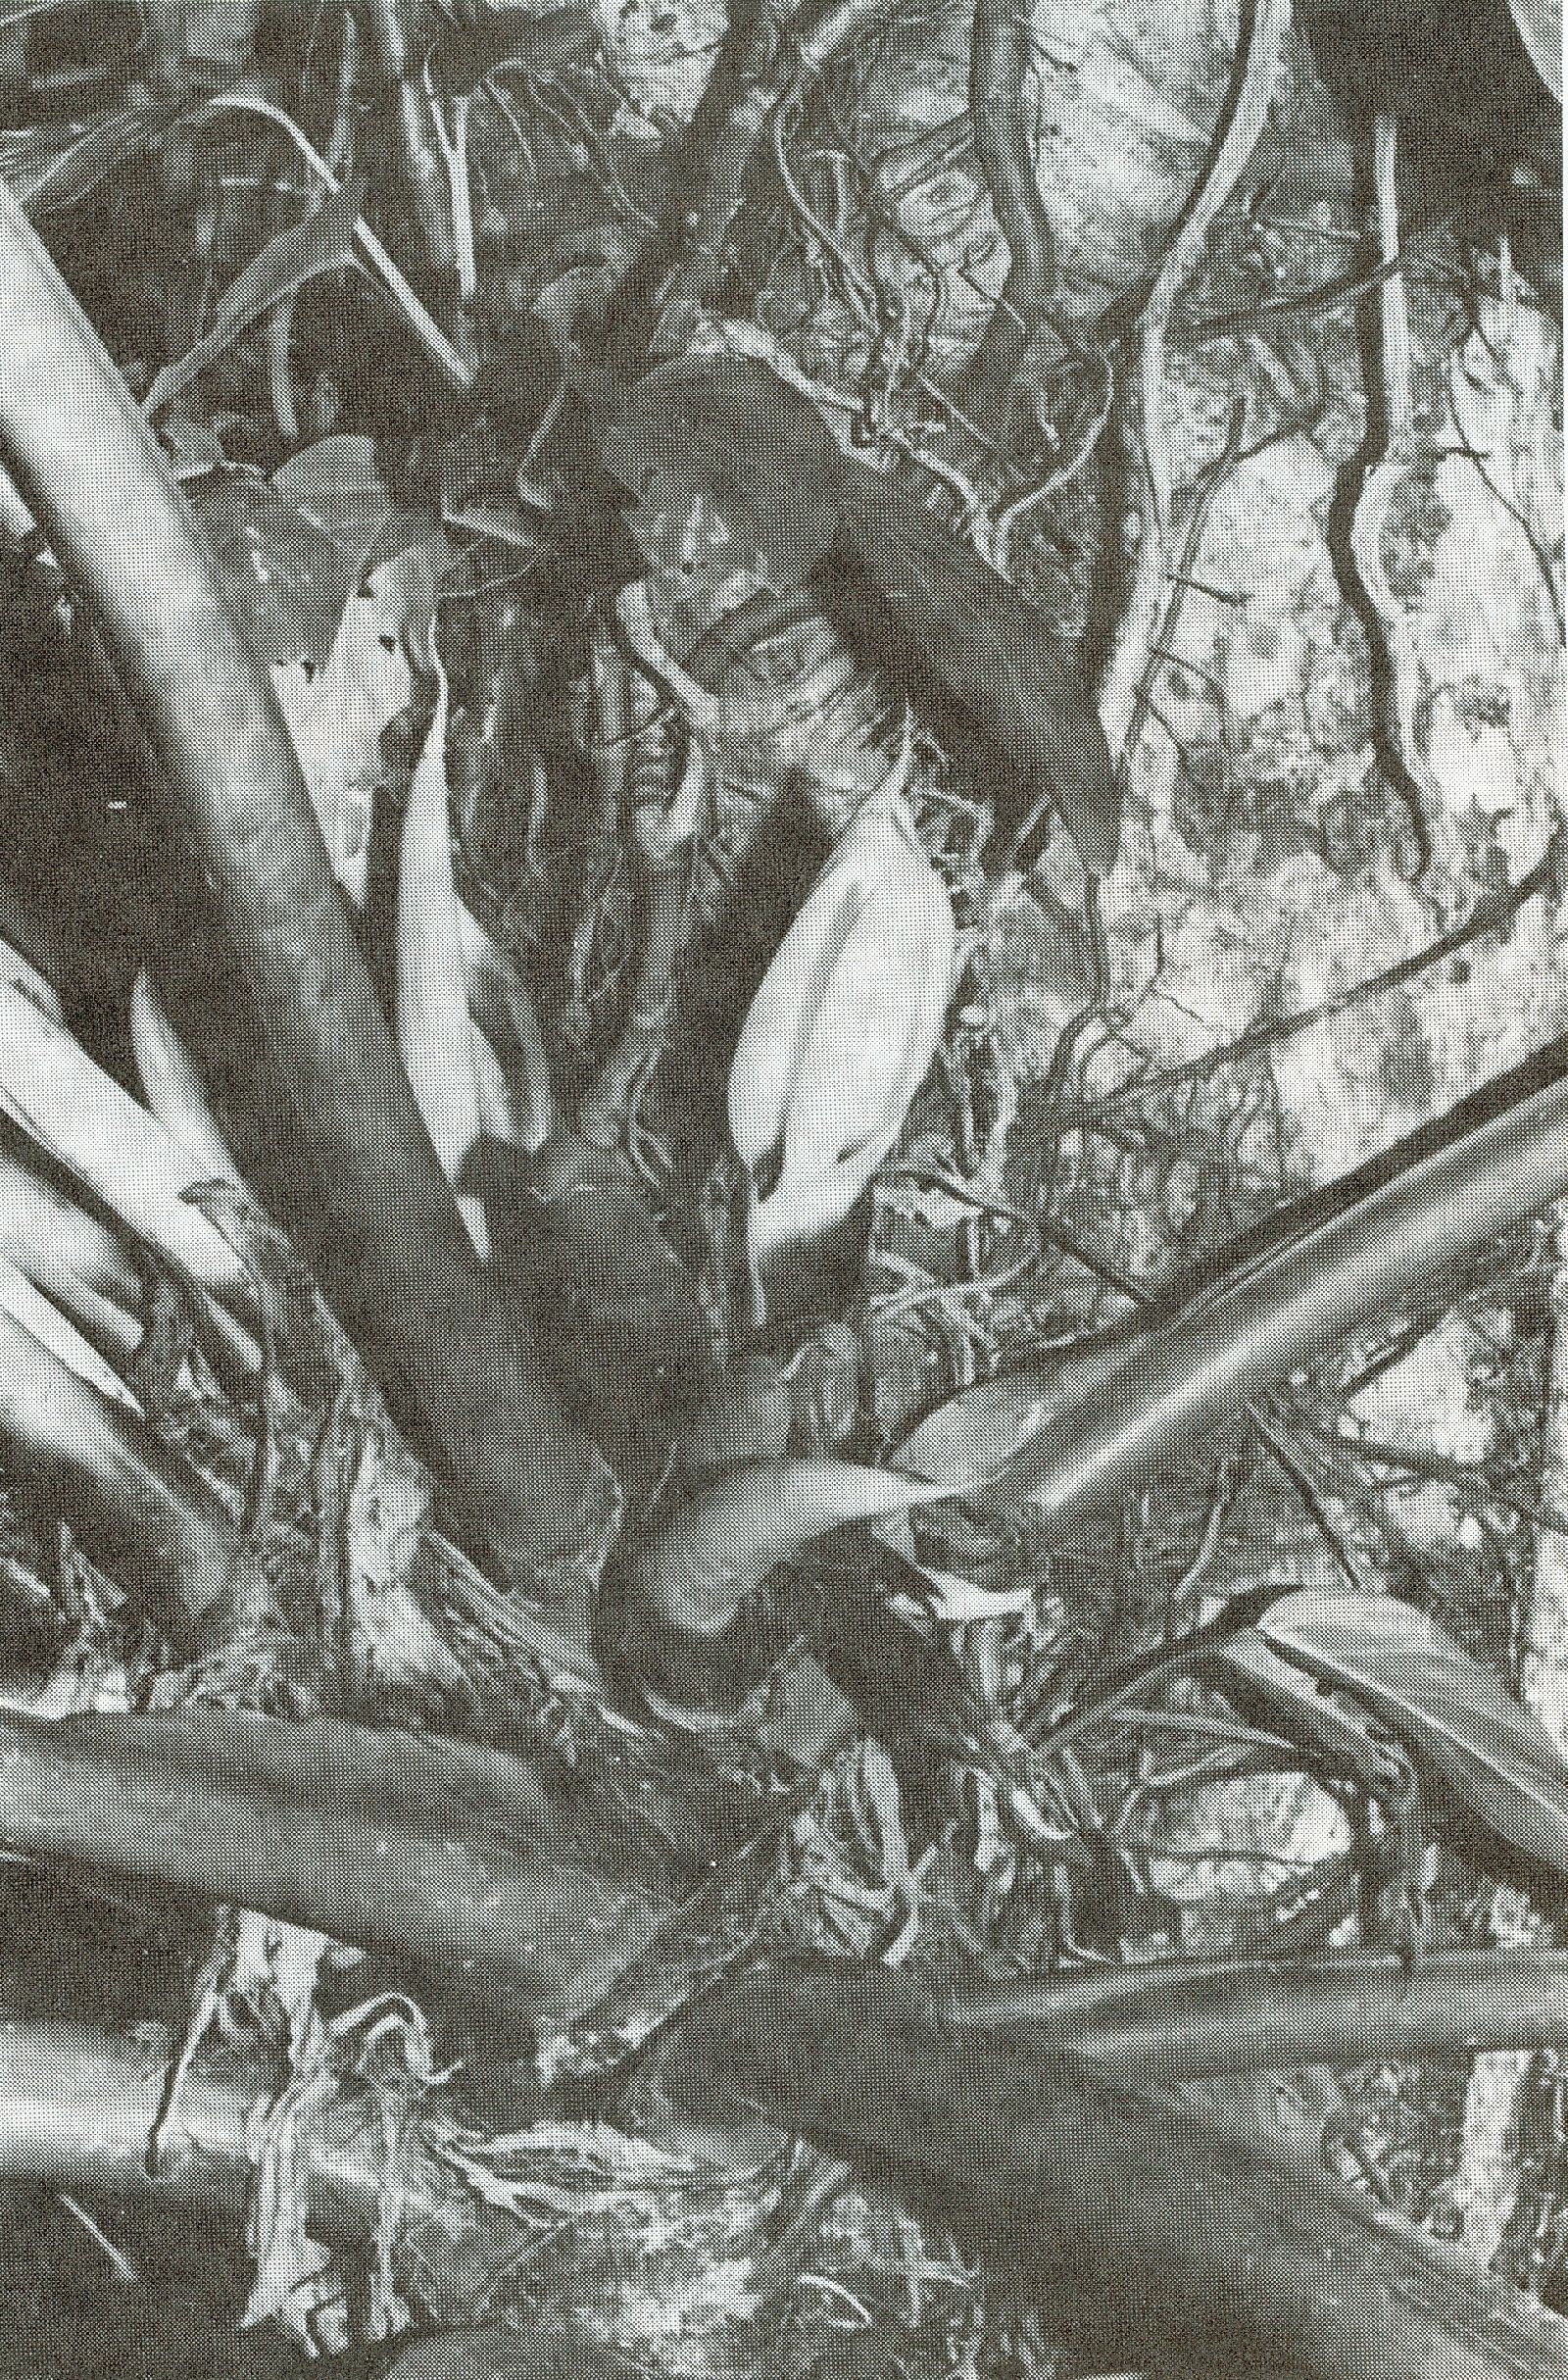 Philodendron fragrantissimum image